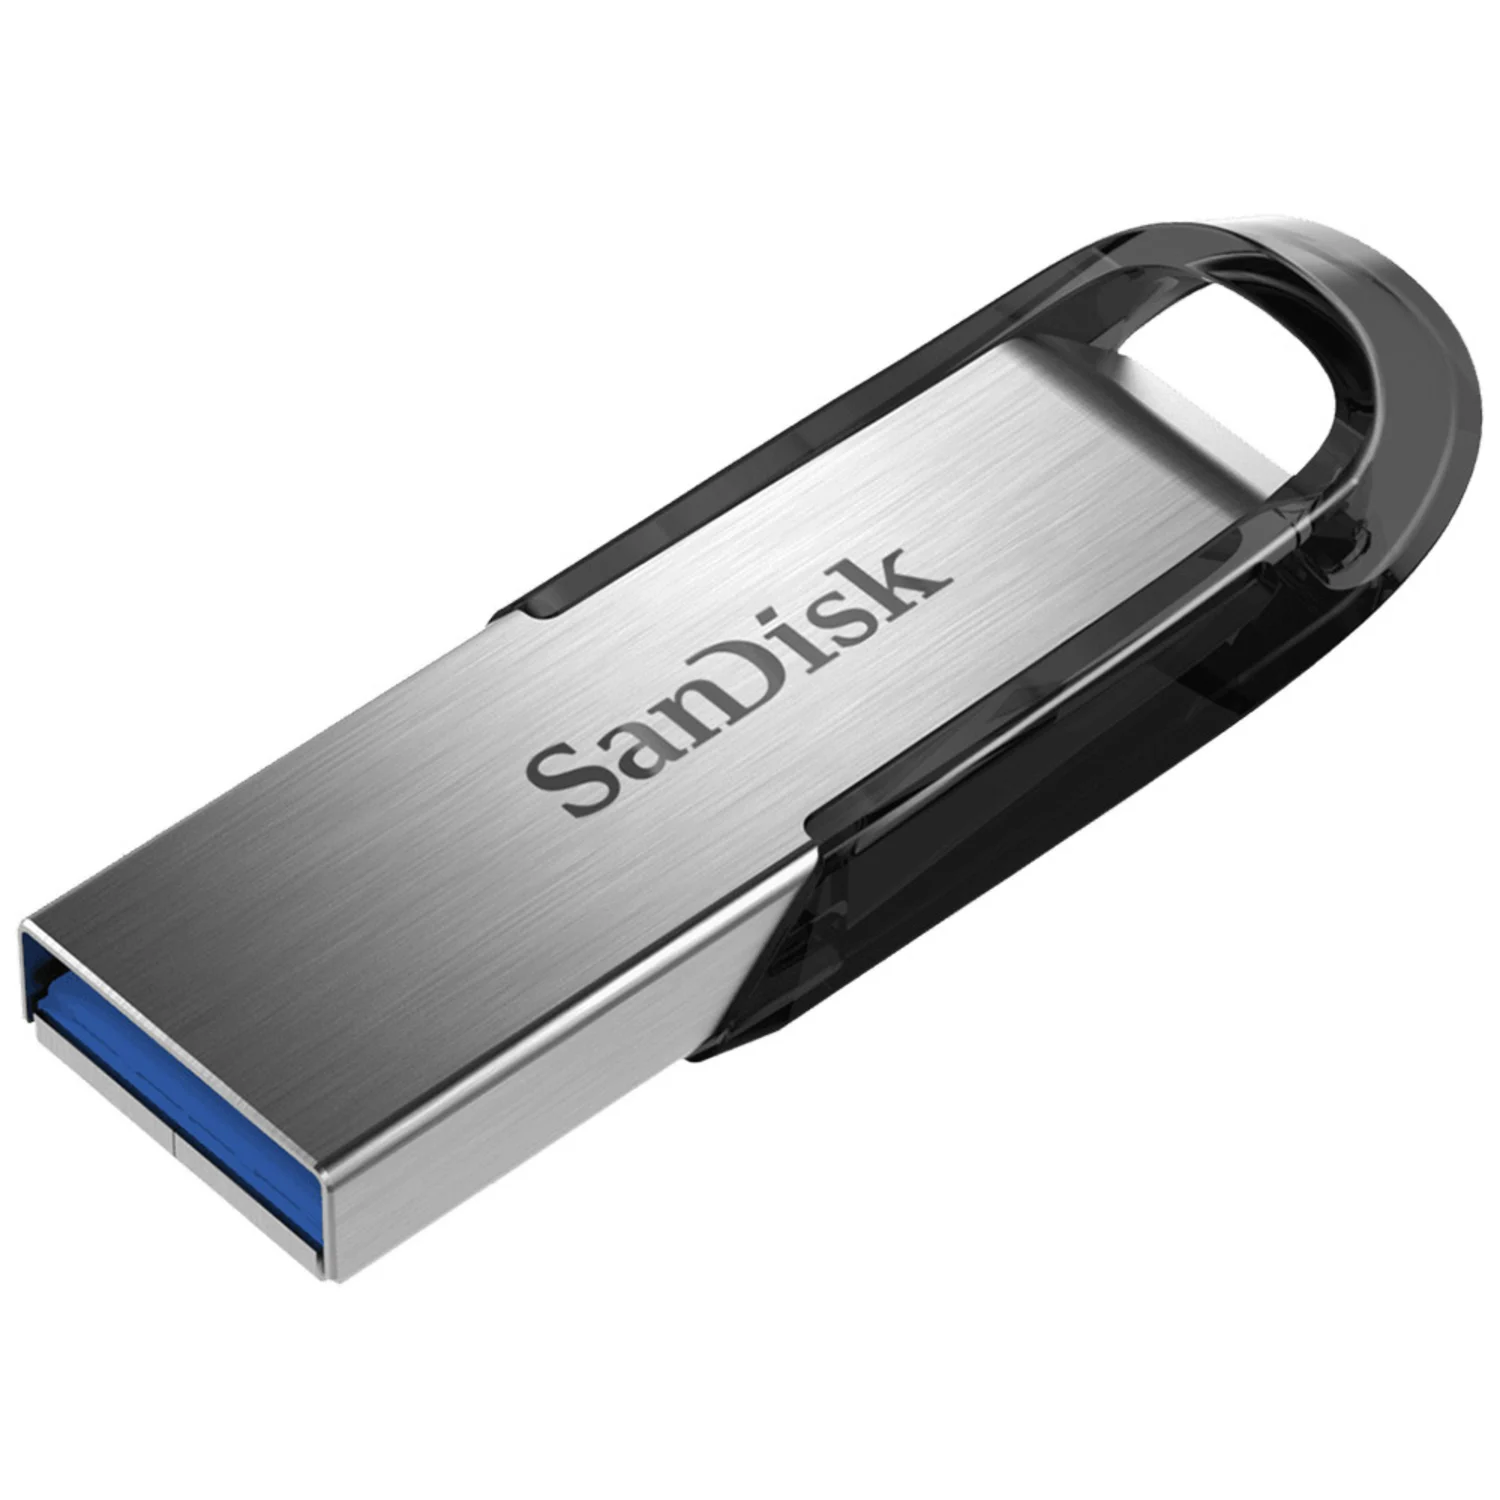 Pendrive SanDisk Z73 Ultra Flash Drive 32GB USB-A USB 3.0 - SDCZ73-032G-G46